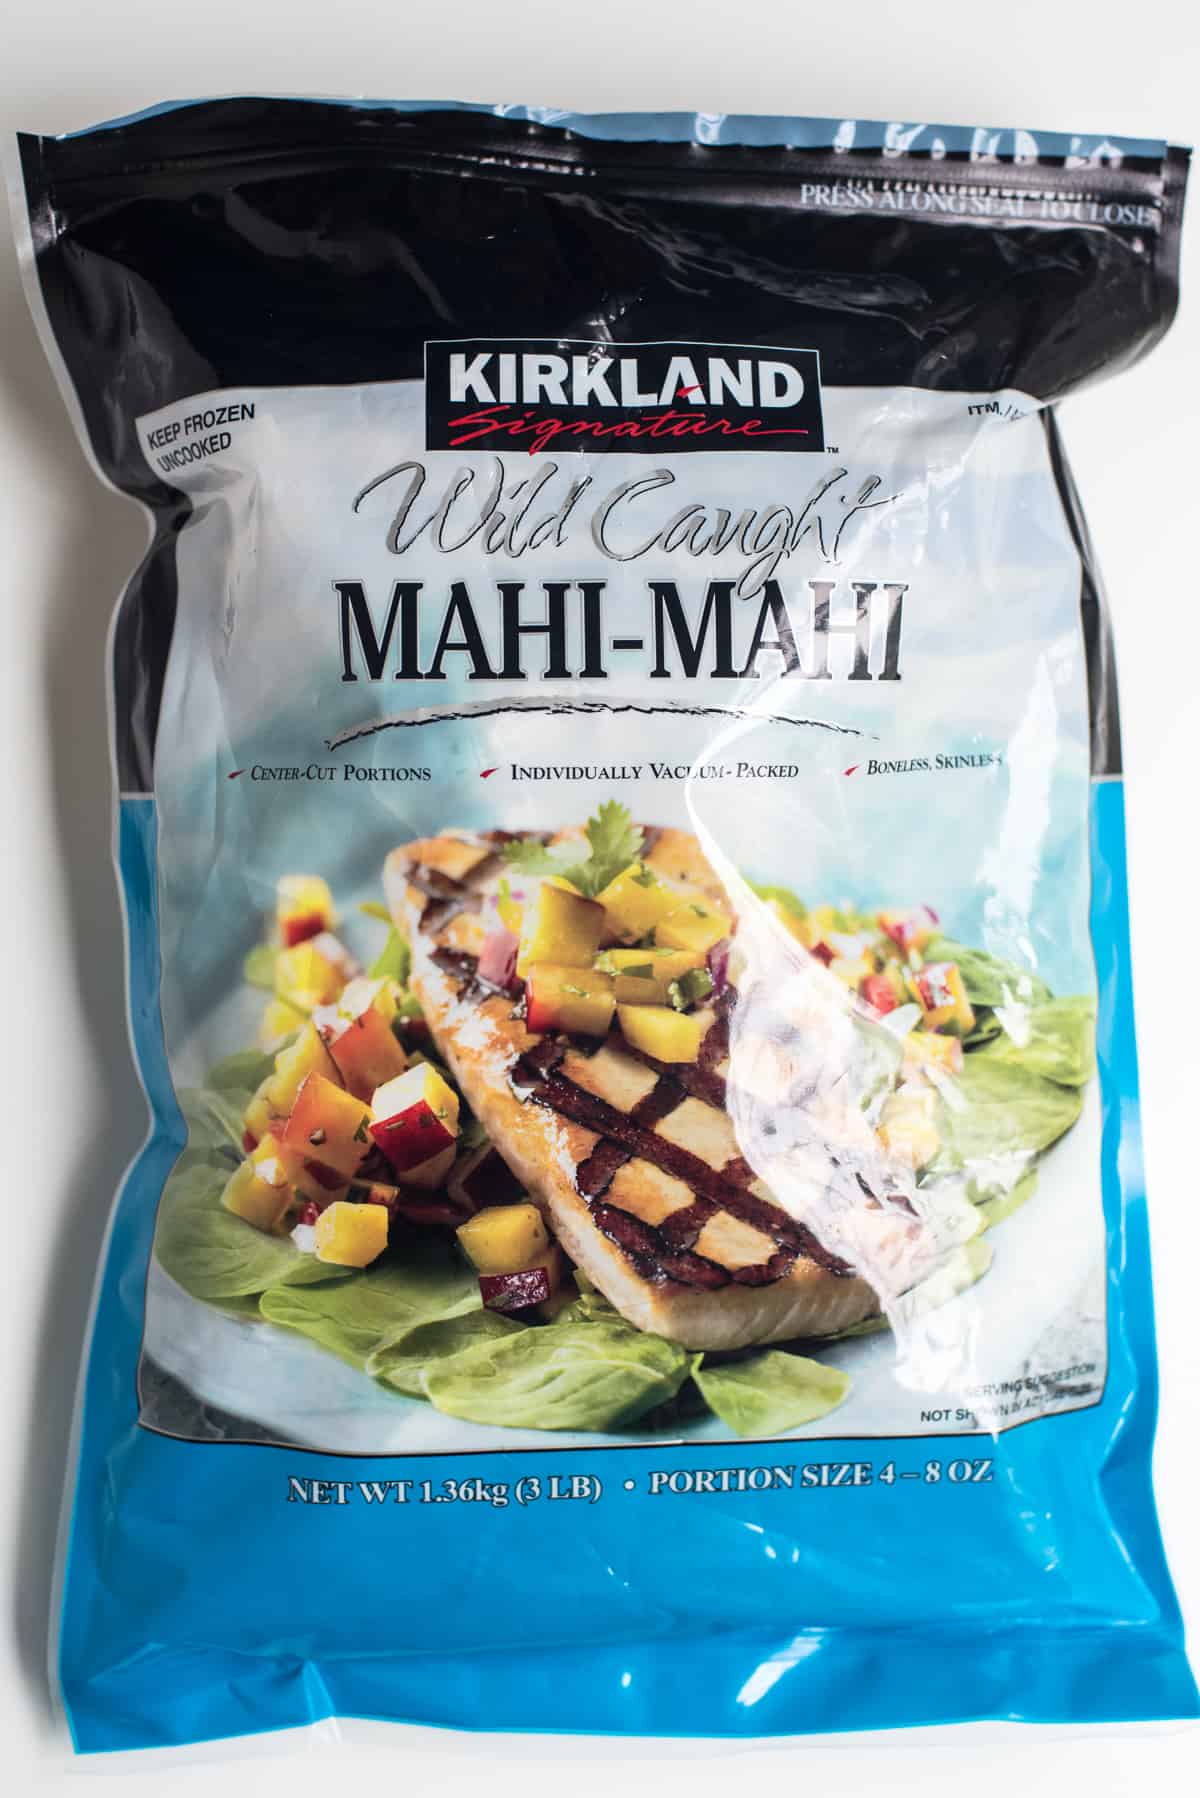 A bag of Kirkland frozen mahi mahi fillets.